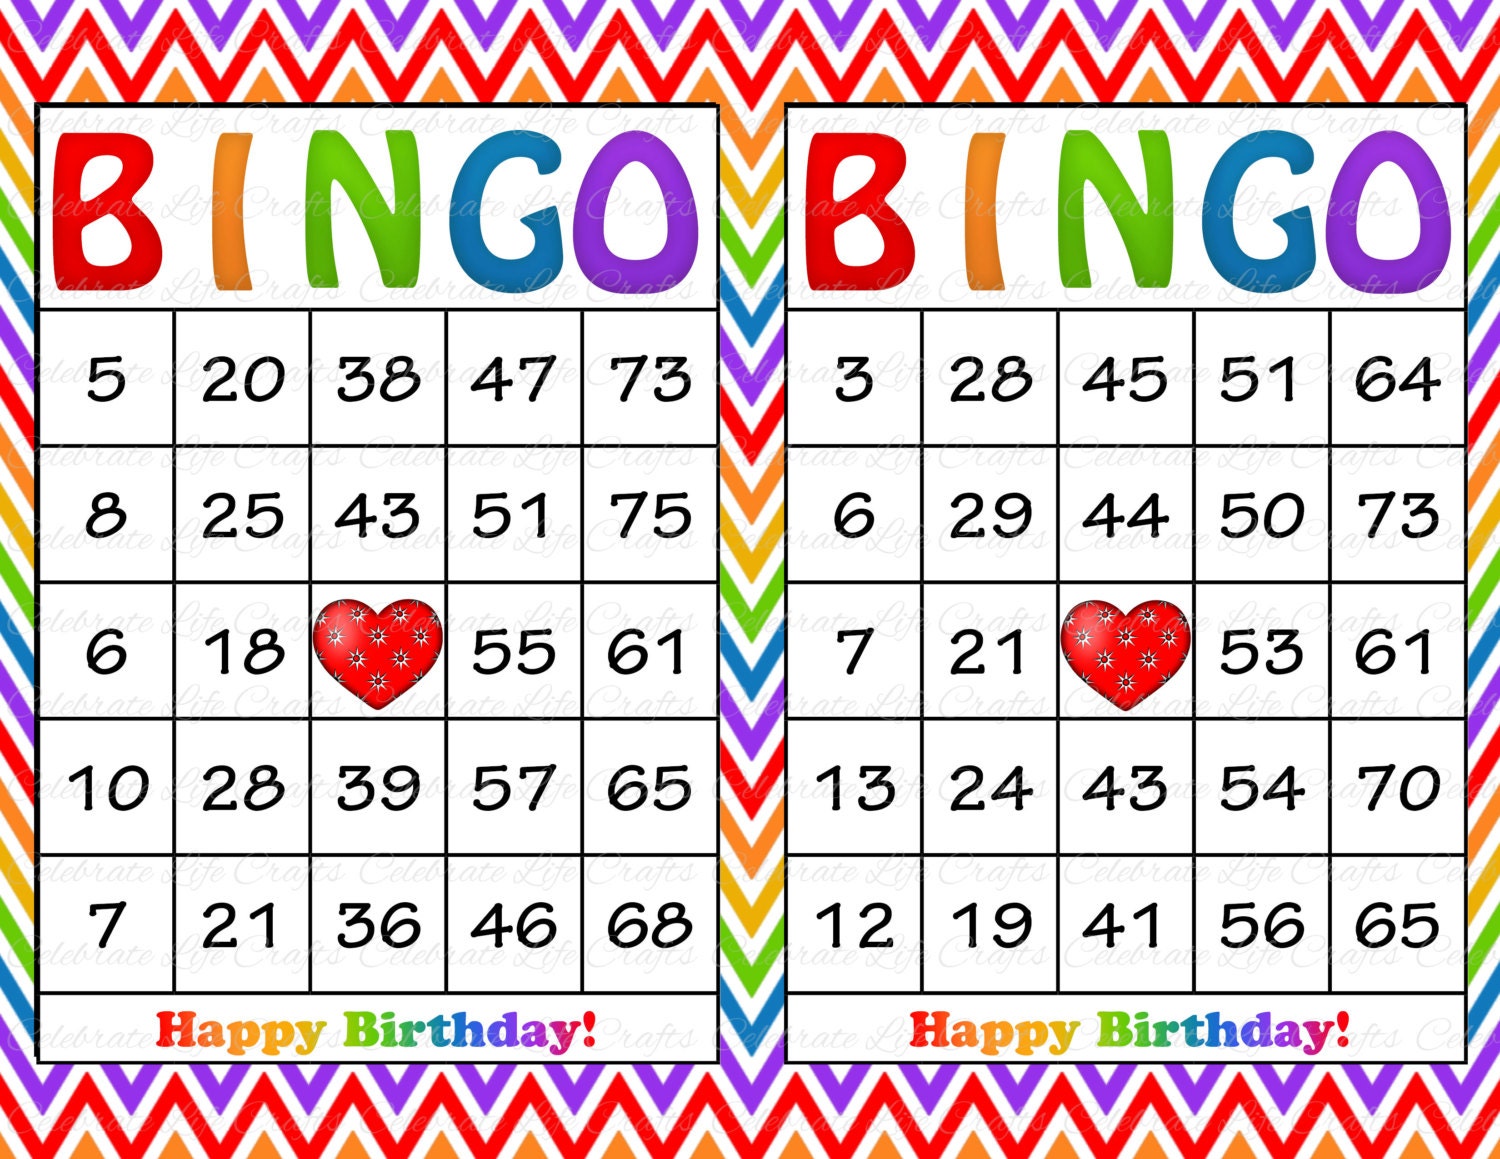 50-free-printable-bingo-cards-30-bb8-star-wars-bingo-cards